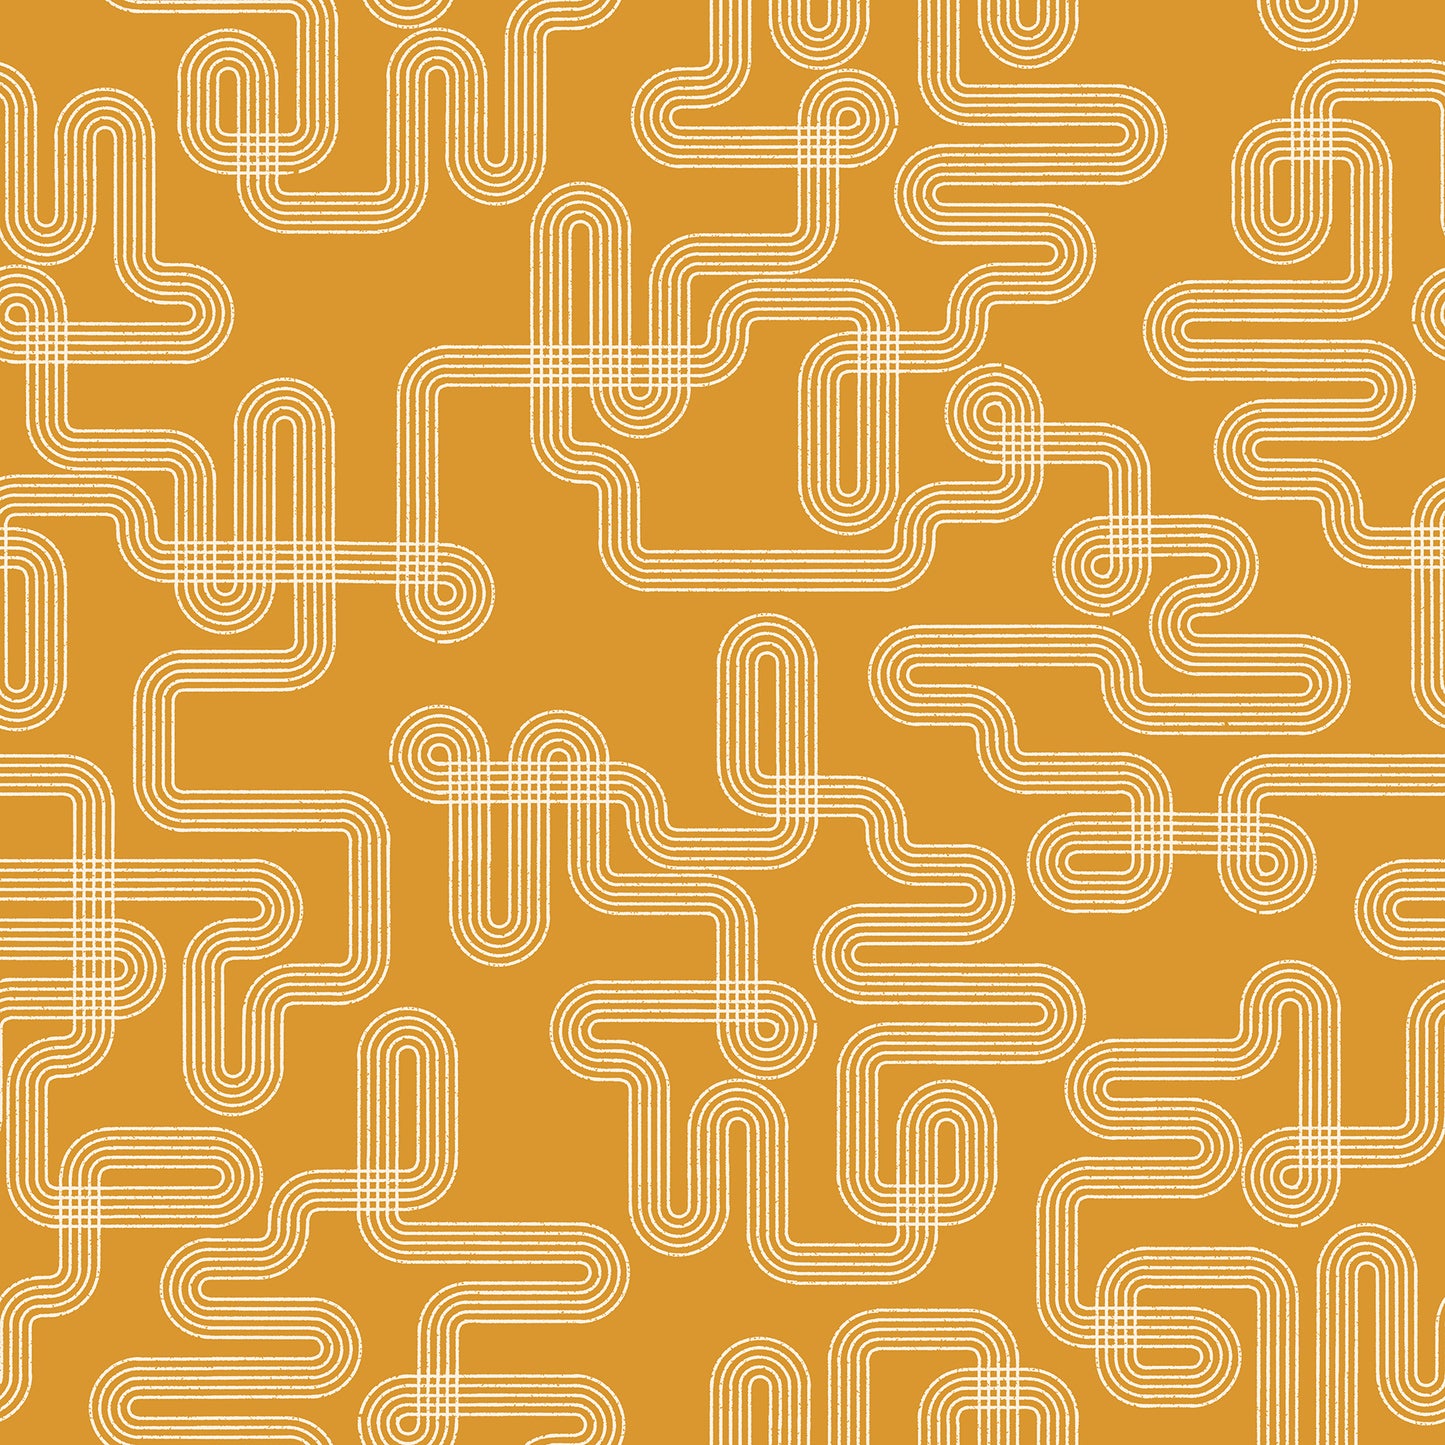 Labyrinth - Cactus - Linear